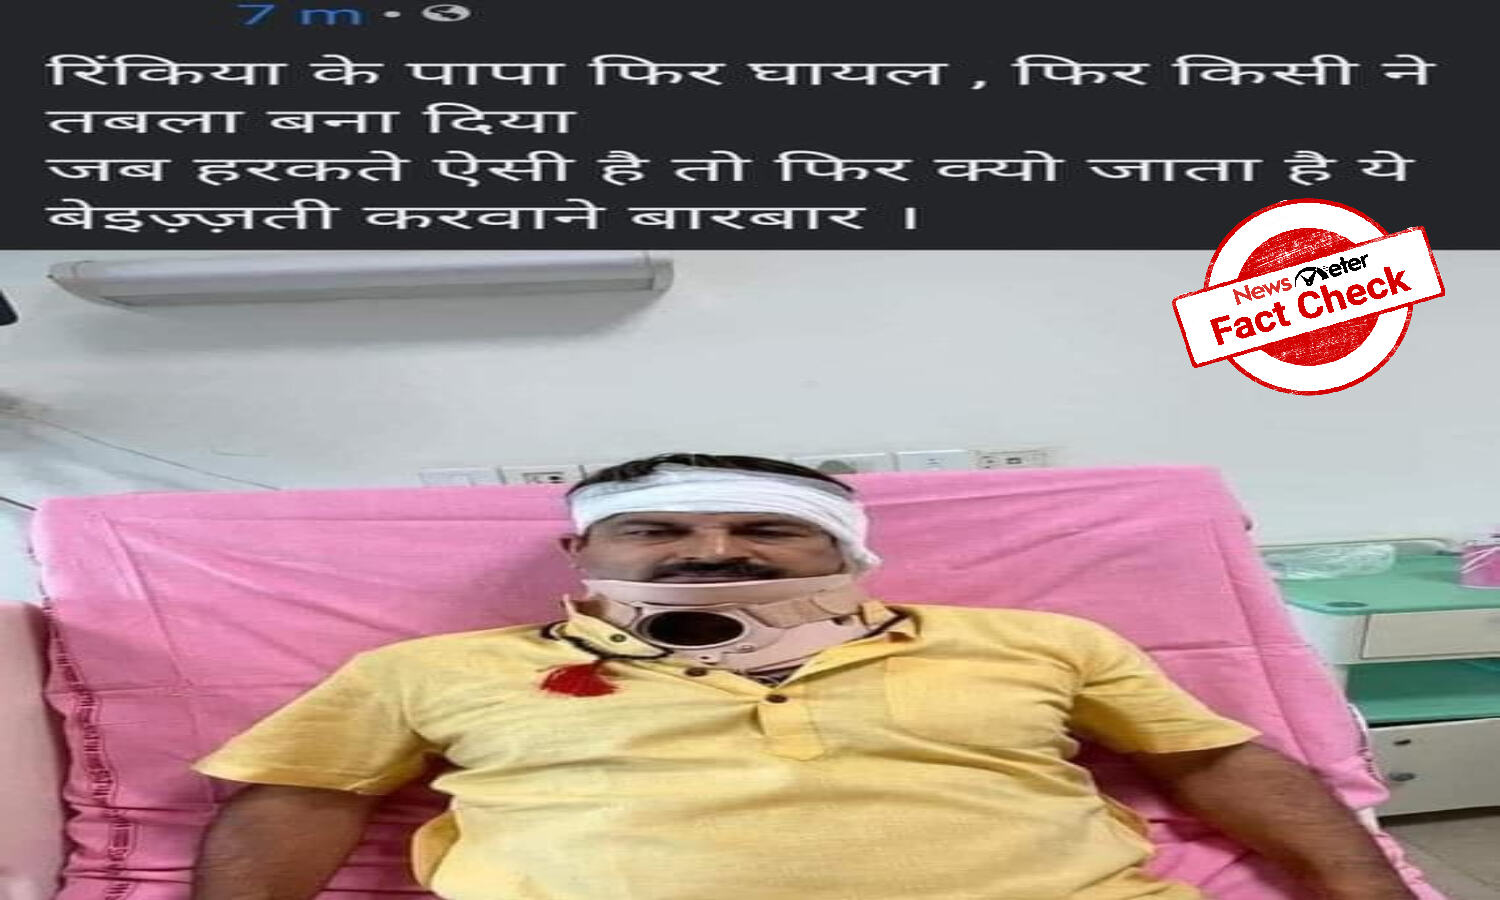 Fact Check: Image of injured Delhi MP Manoj Tiwari shared with misleading  claim